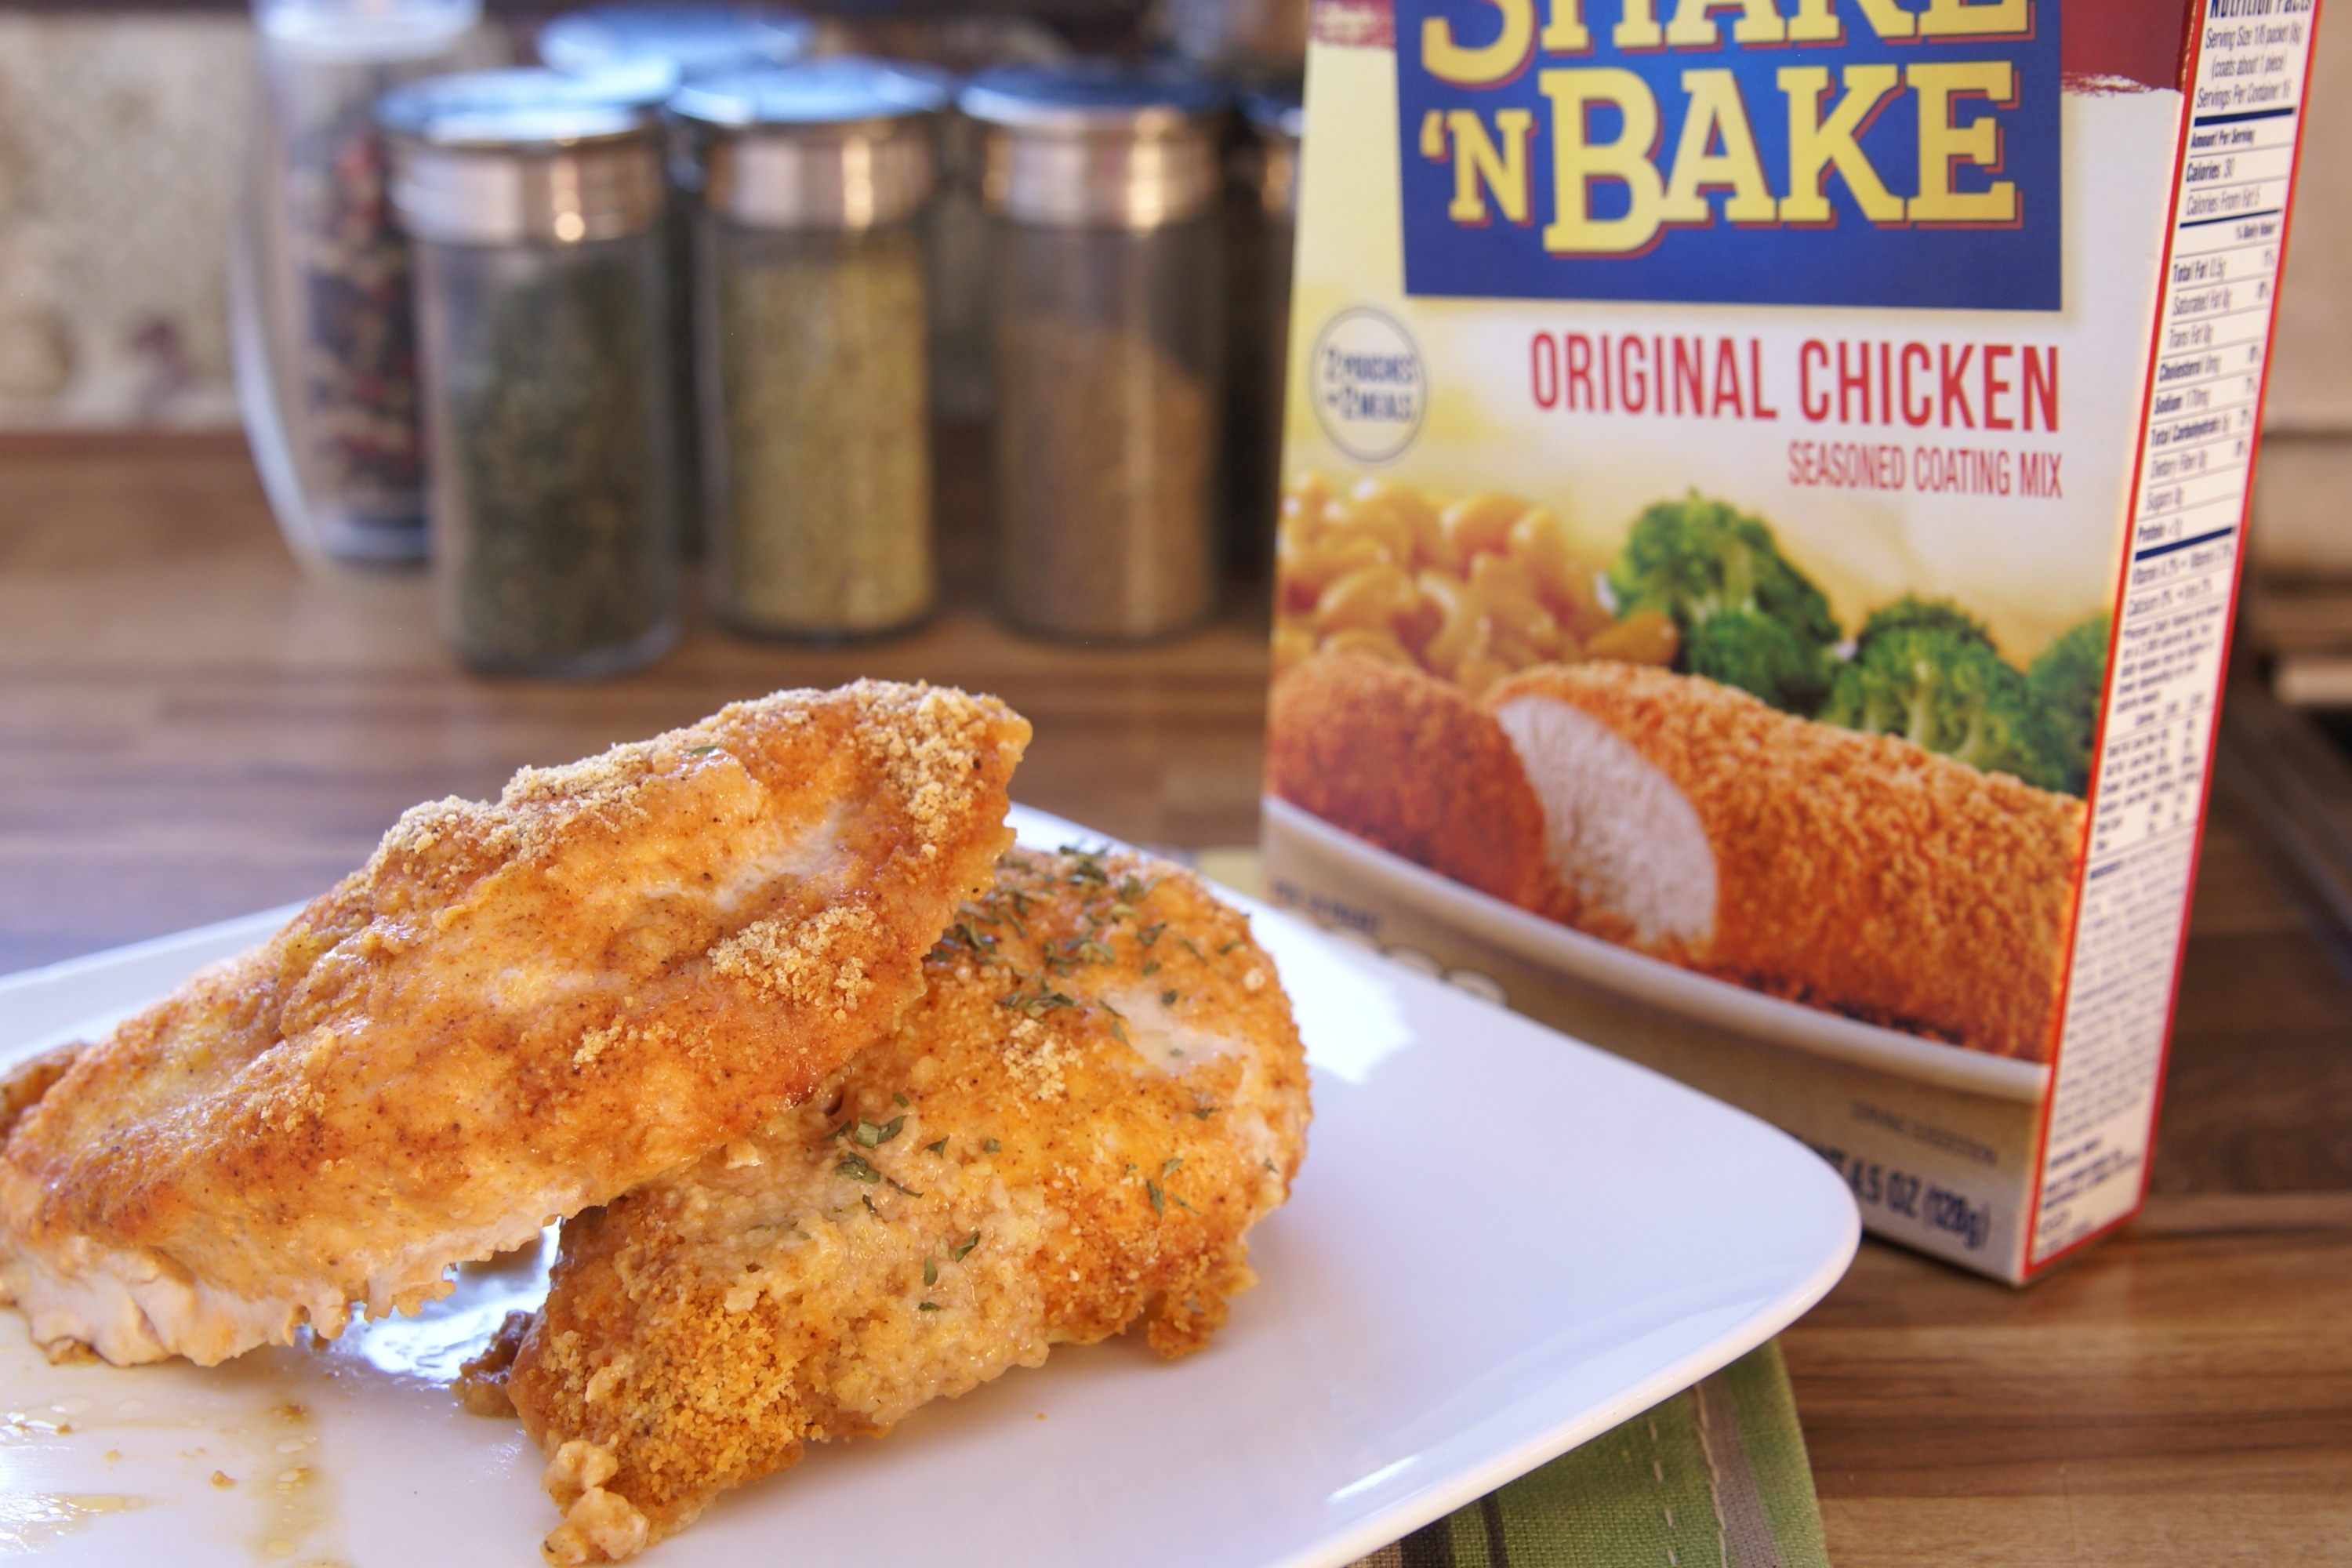 Ways to Make Chicken With Shake 'n Bake